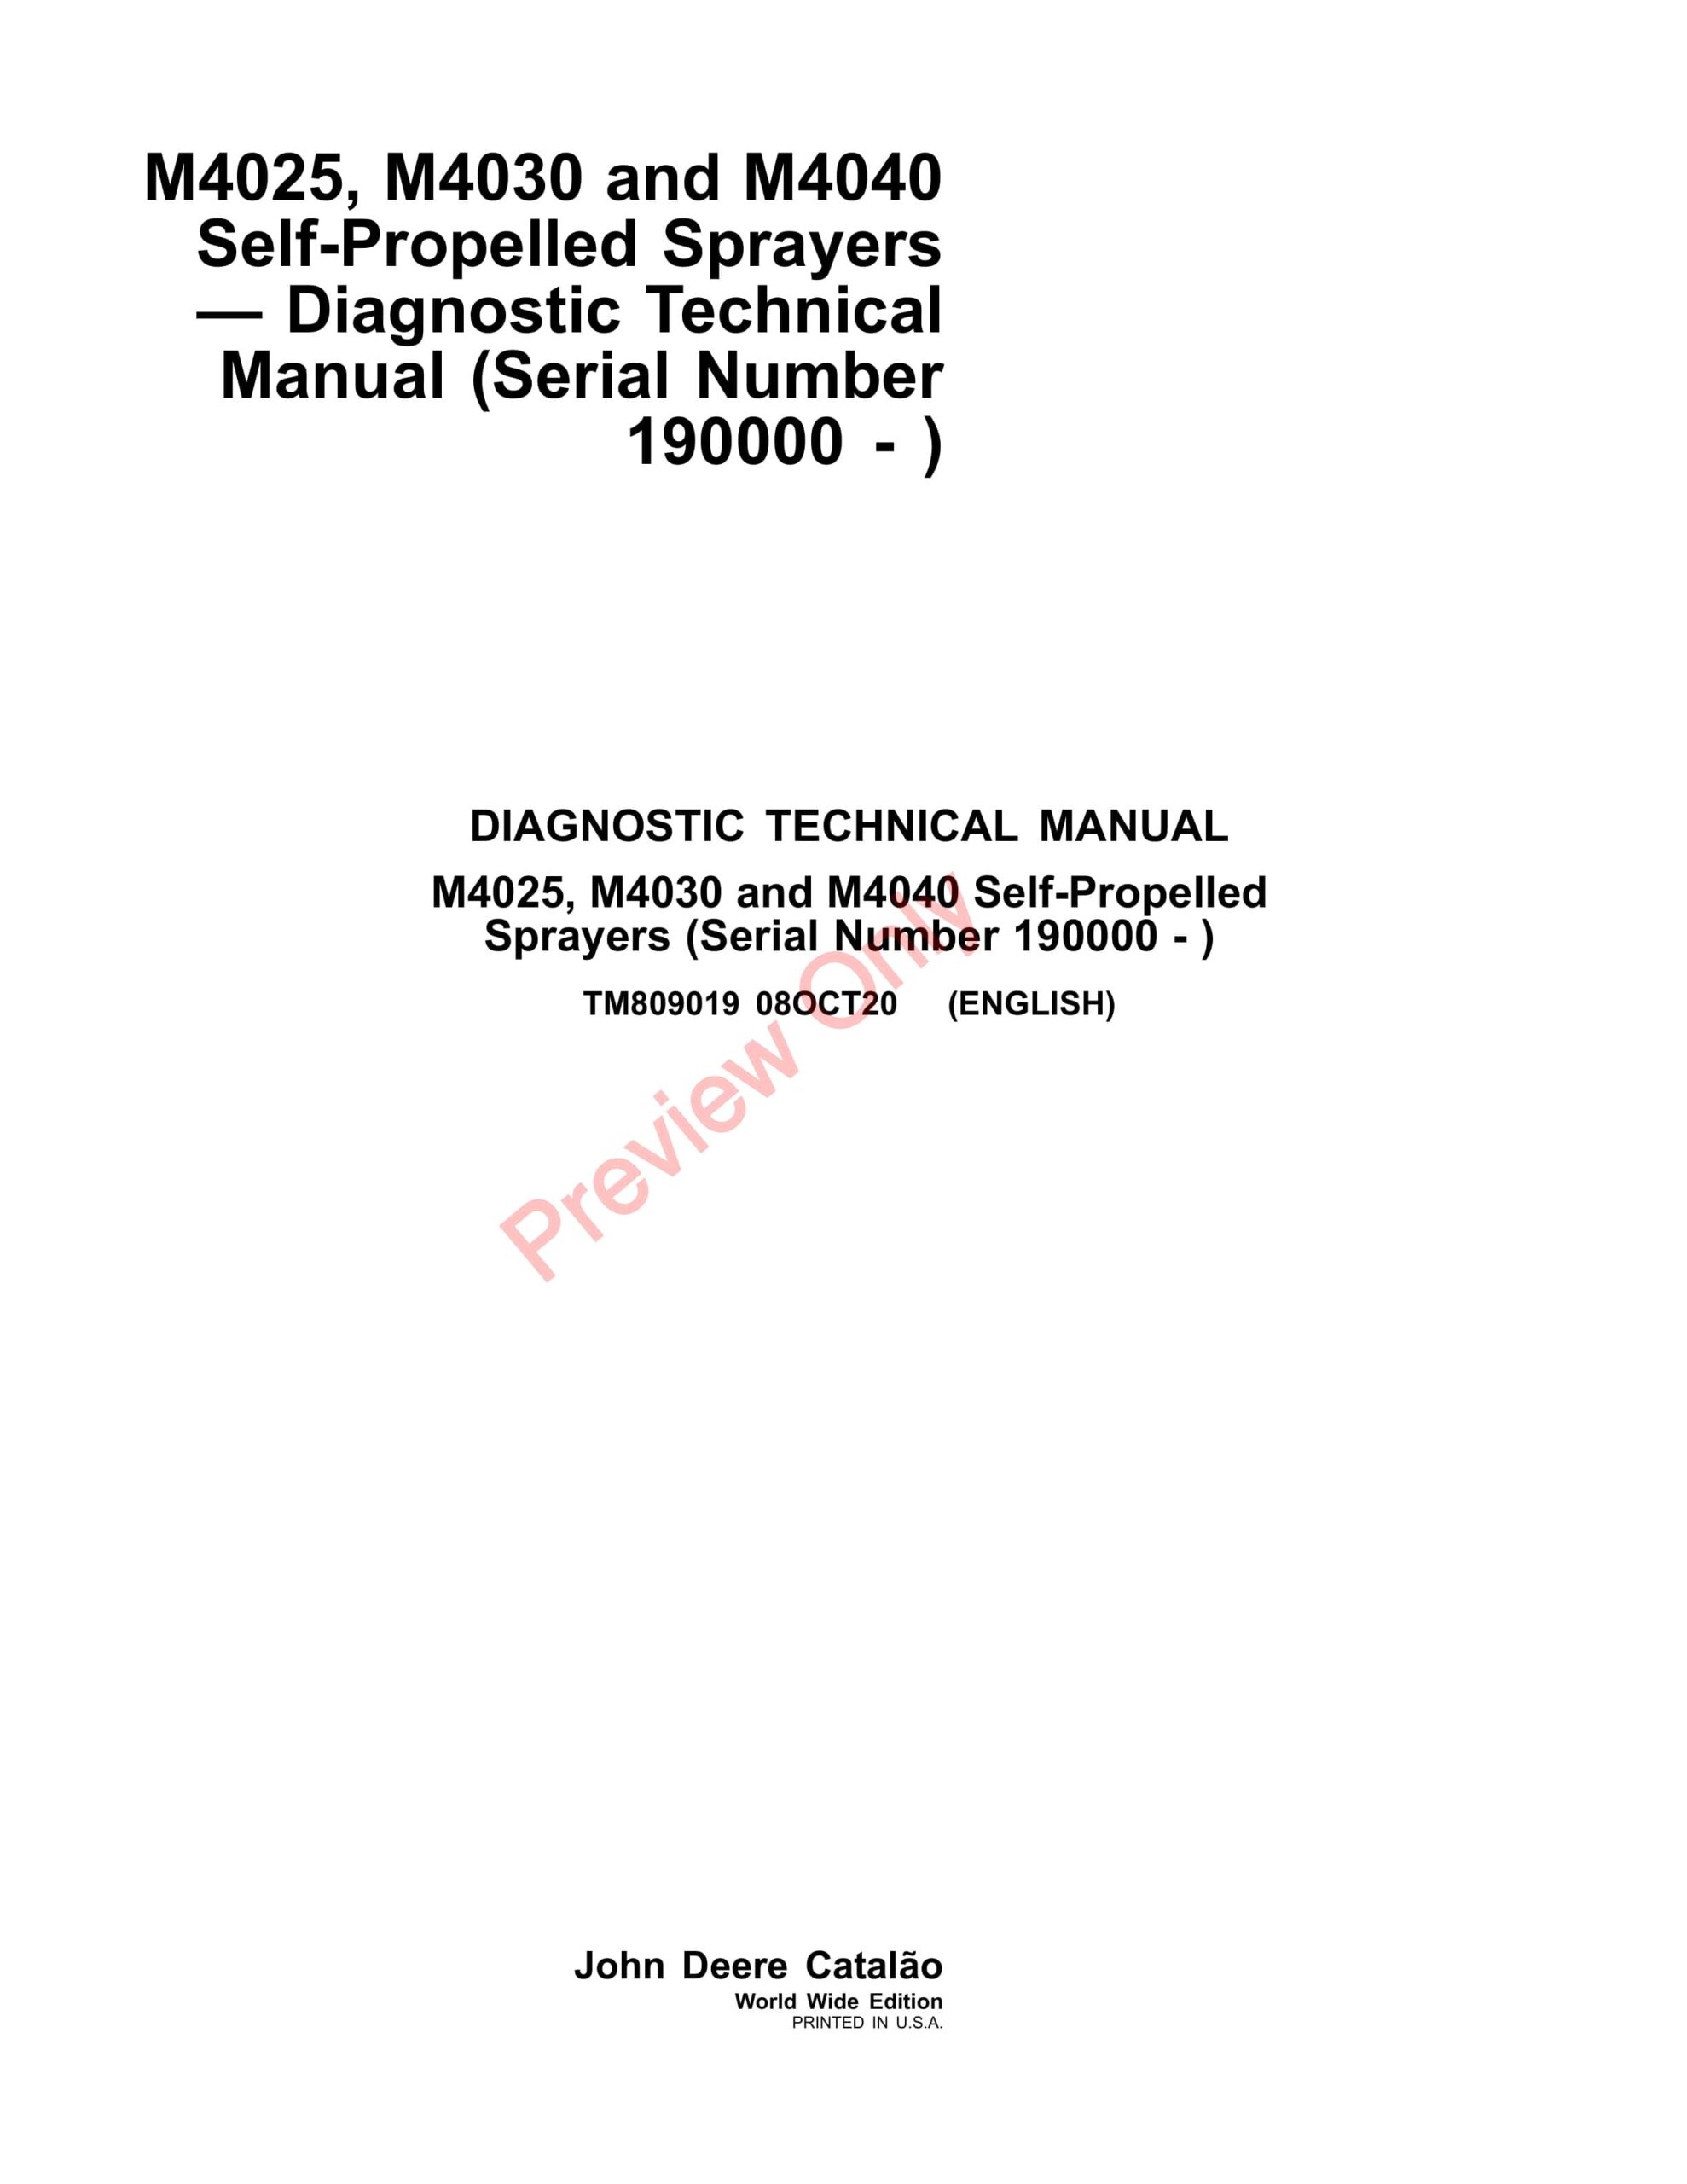 John Deere M4025, M4030 and M4040 Self-Propelled Sprayers (190000-) Diagnostic Technical Manual TM809019 08OCT20-1